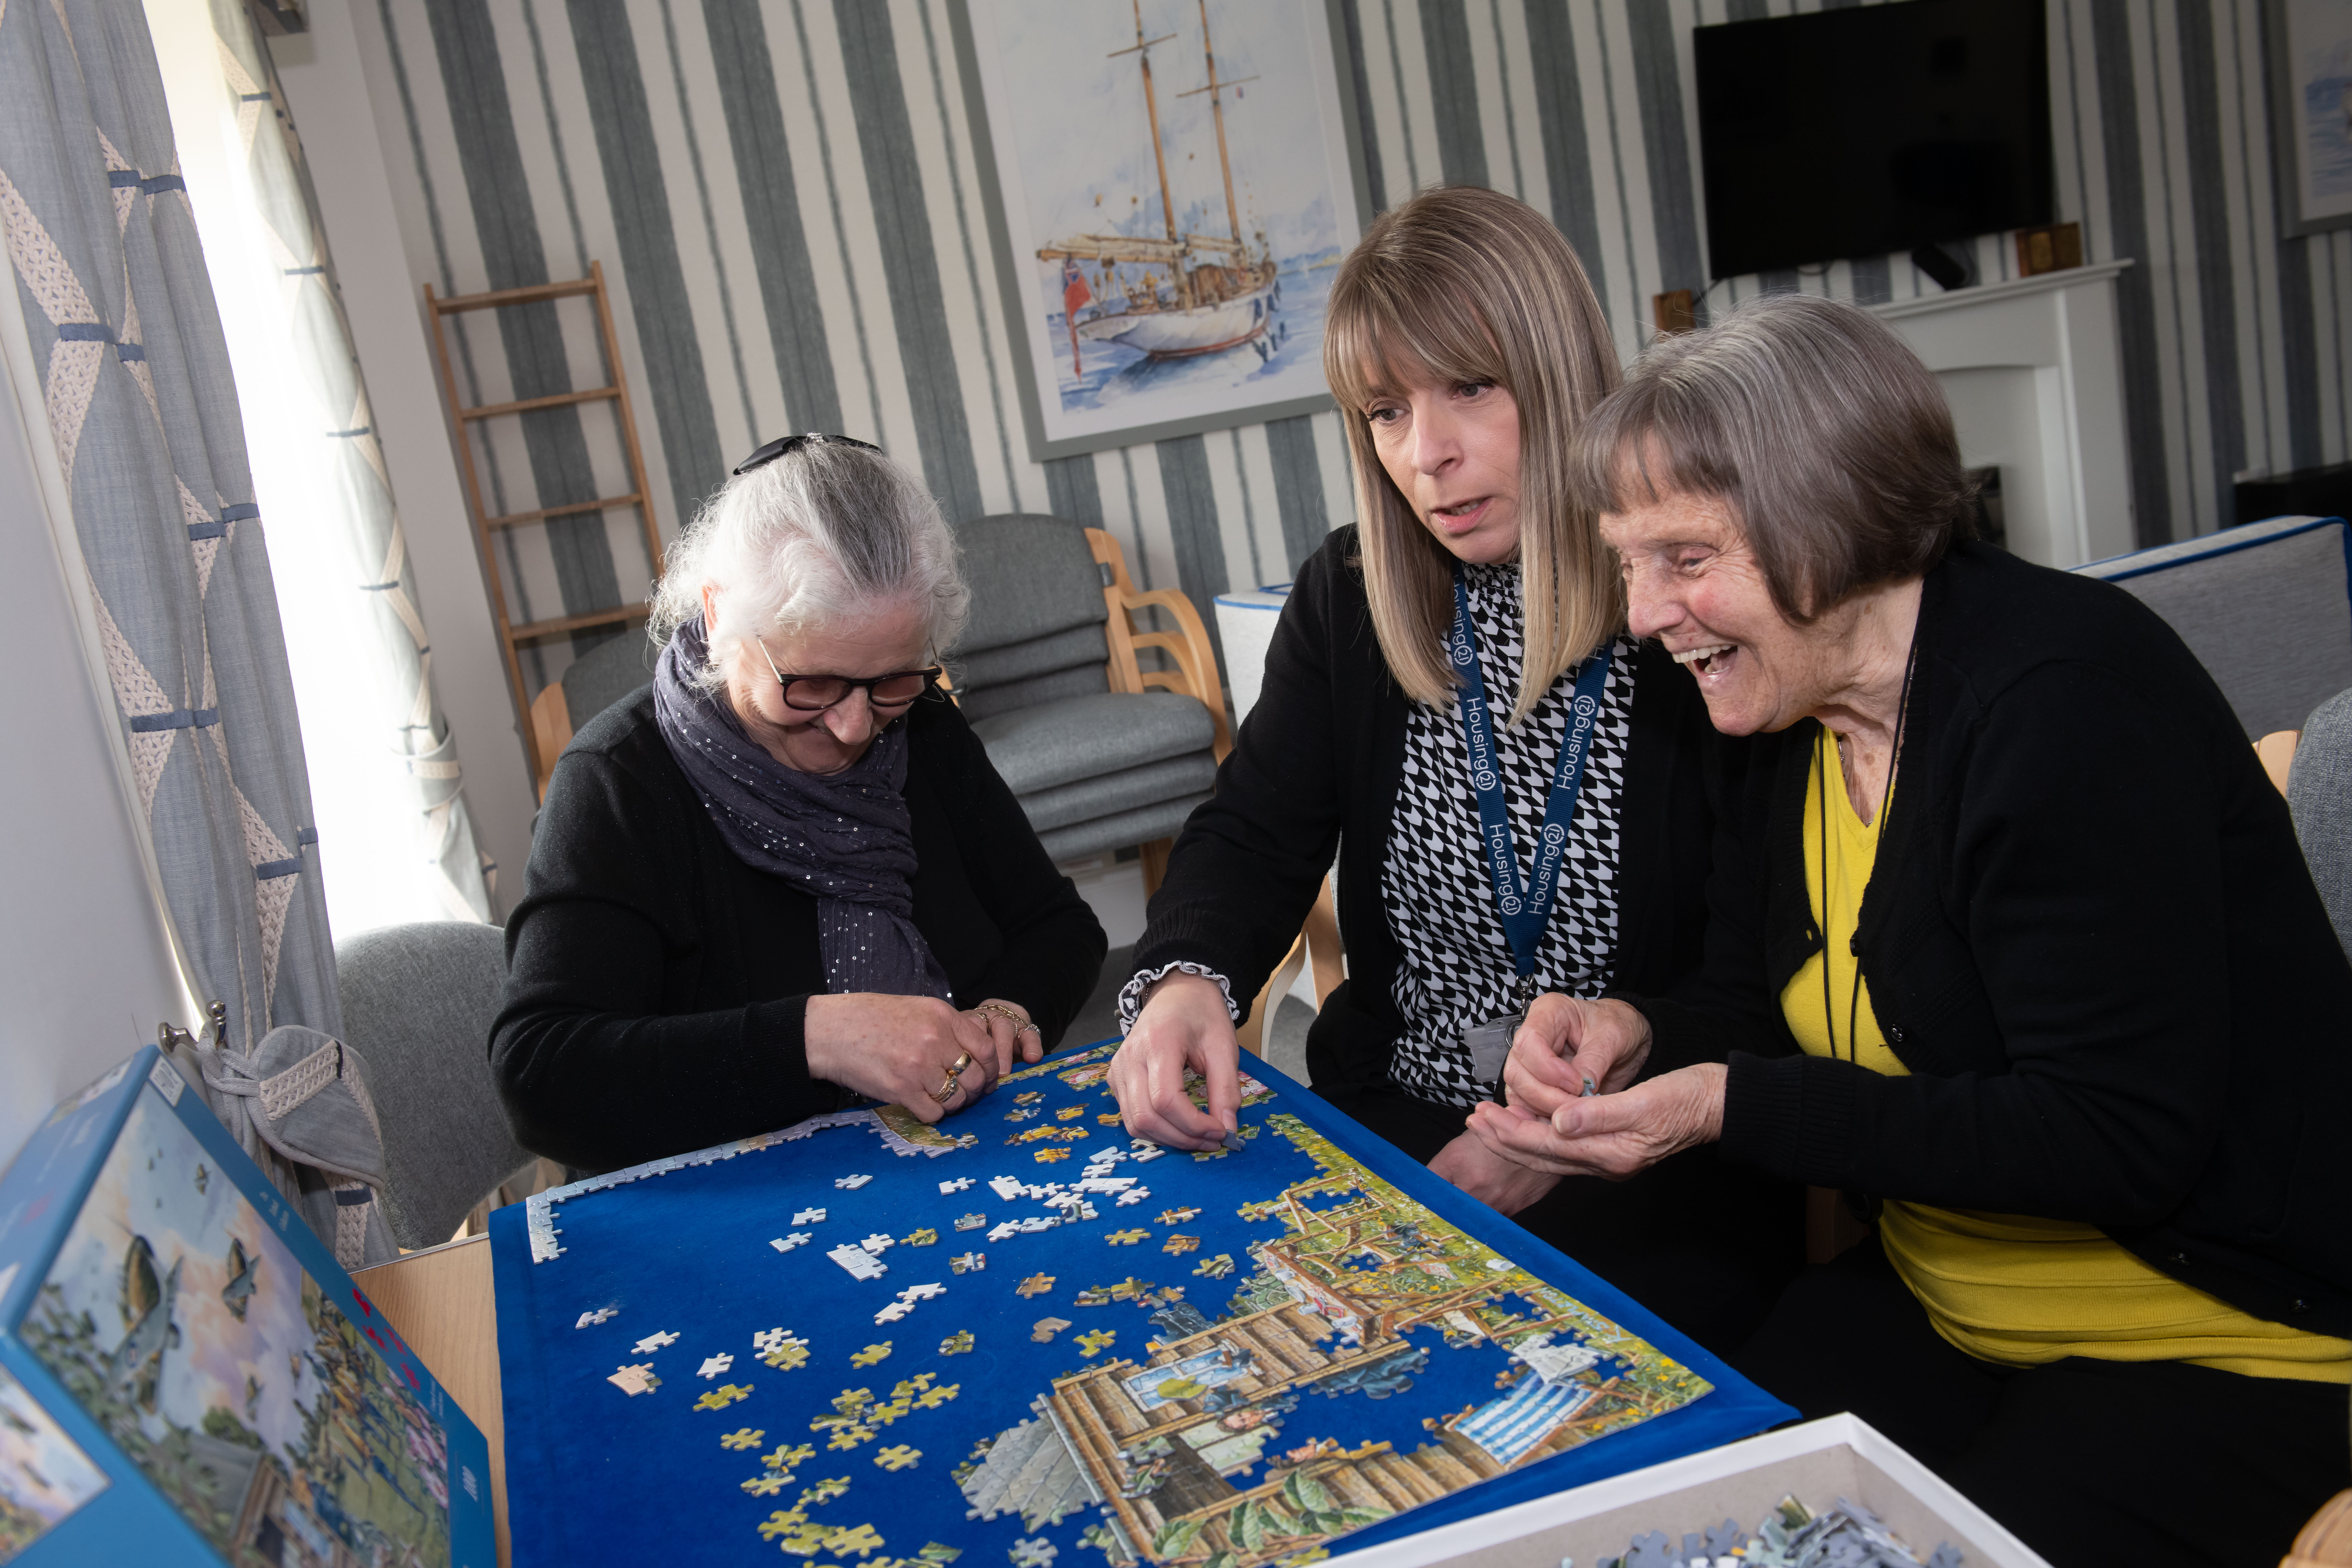 Three ladies doing a jigsaw